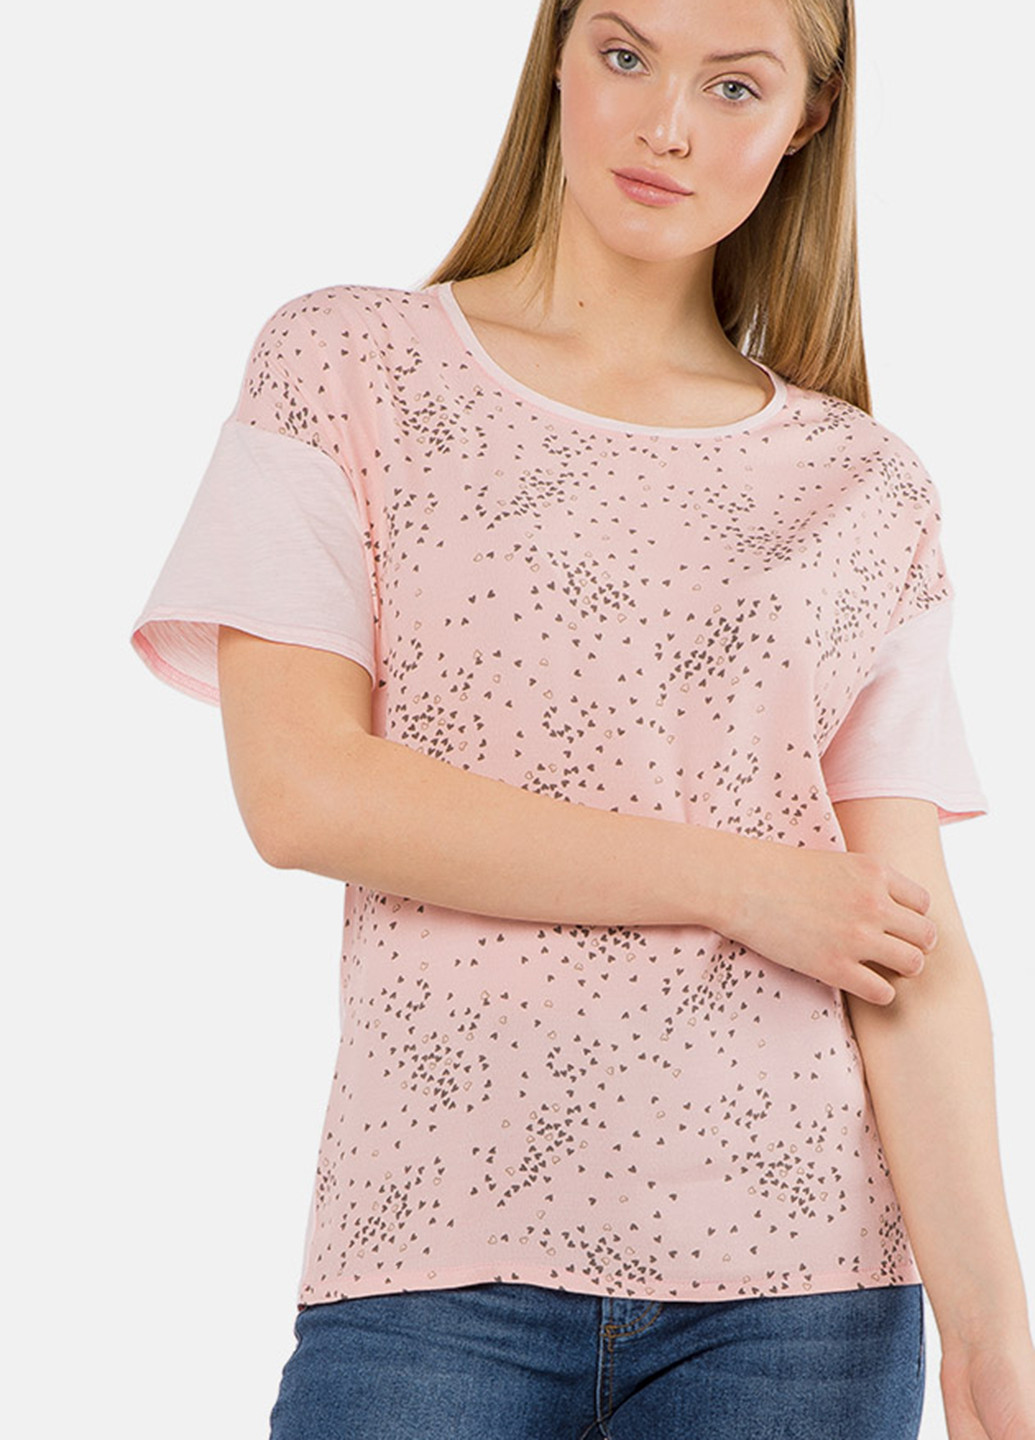 Светло-розовая летняя футболка MR 520